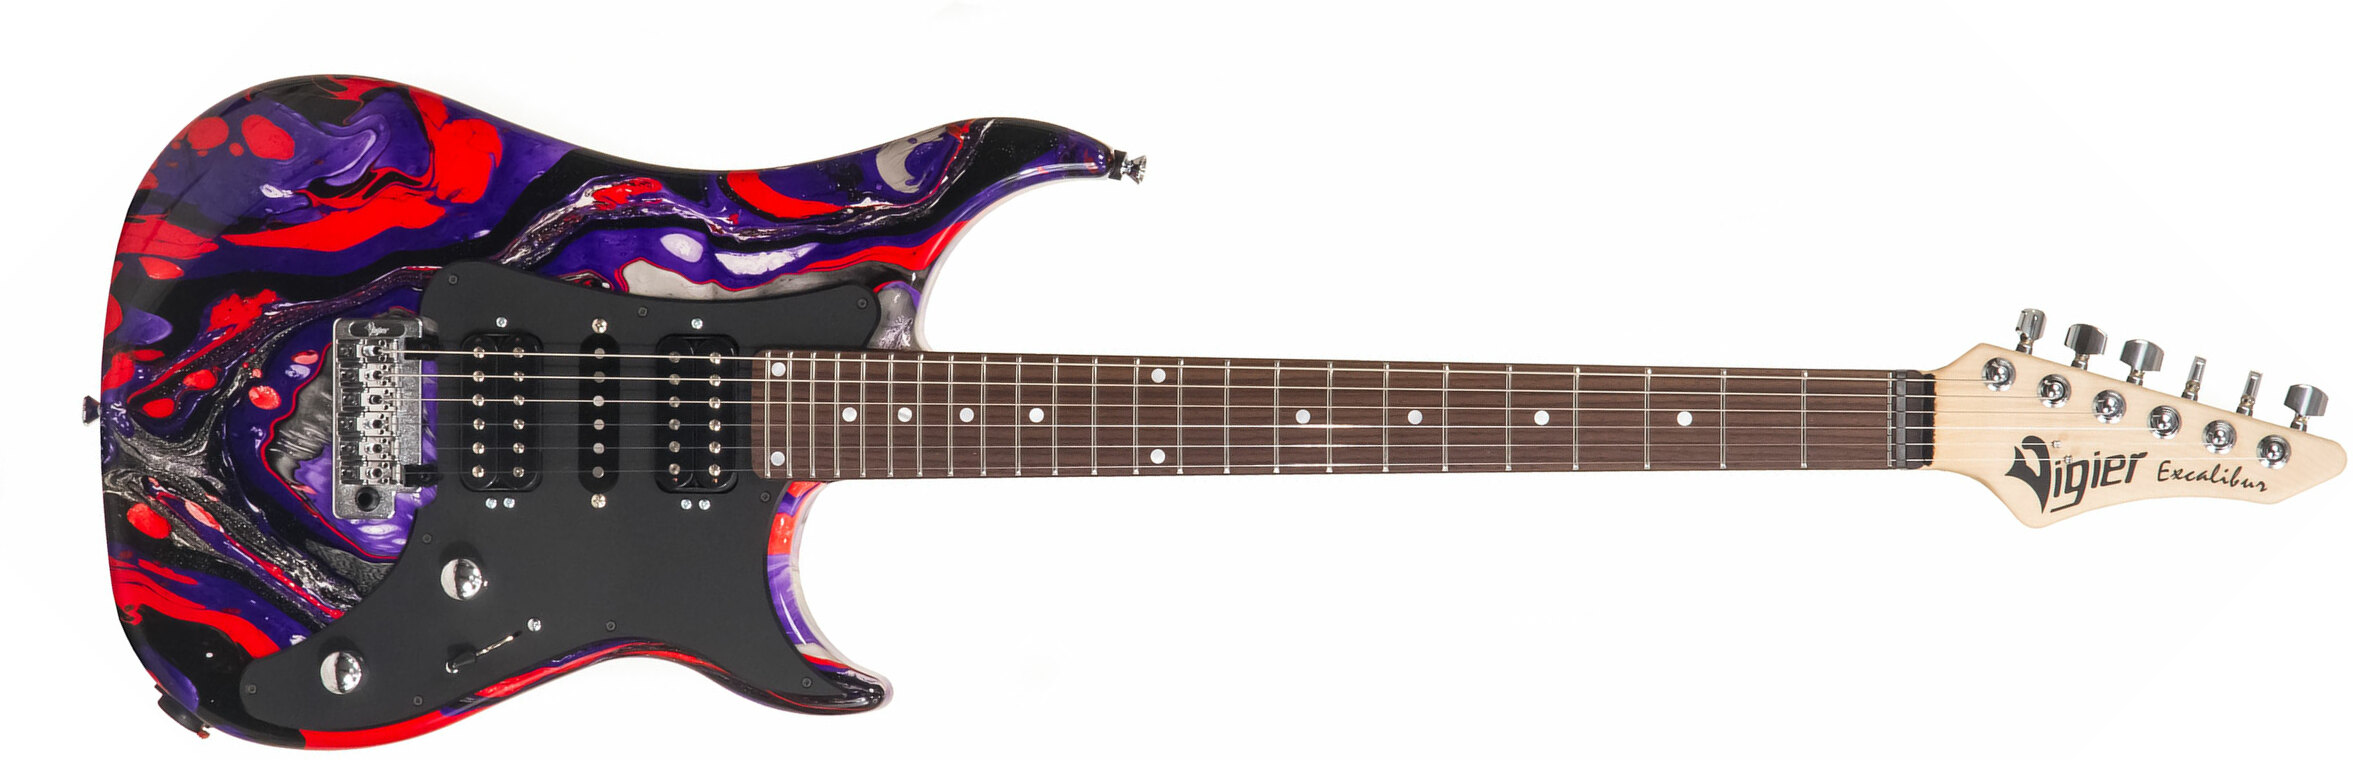 Vigier Excalibur Supraa Hsh Trem Rw - Rock Art Purple Red Black - Elektrische gitaar in Str-vorm - Main picture